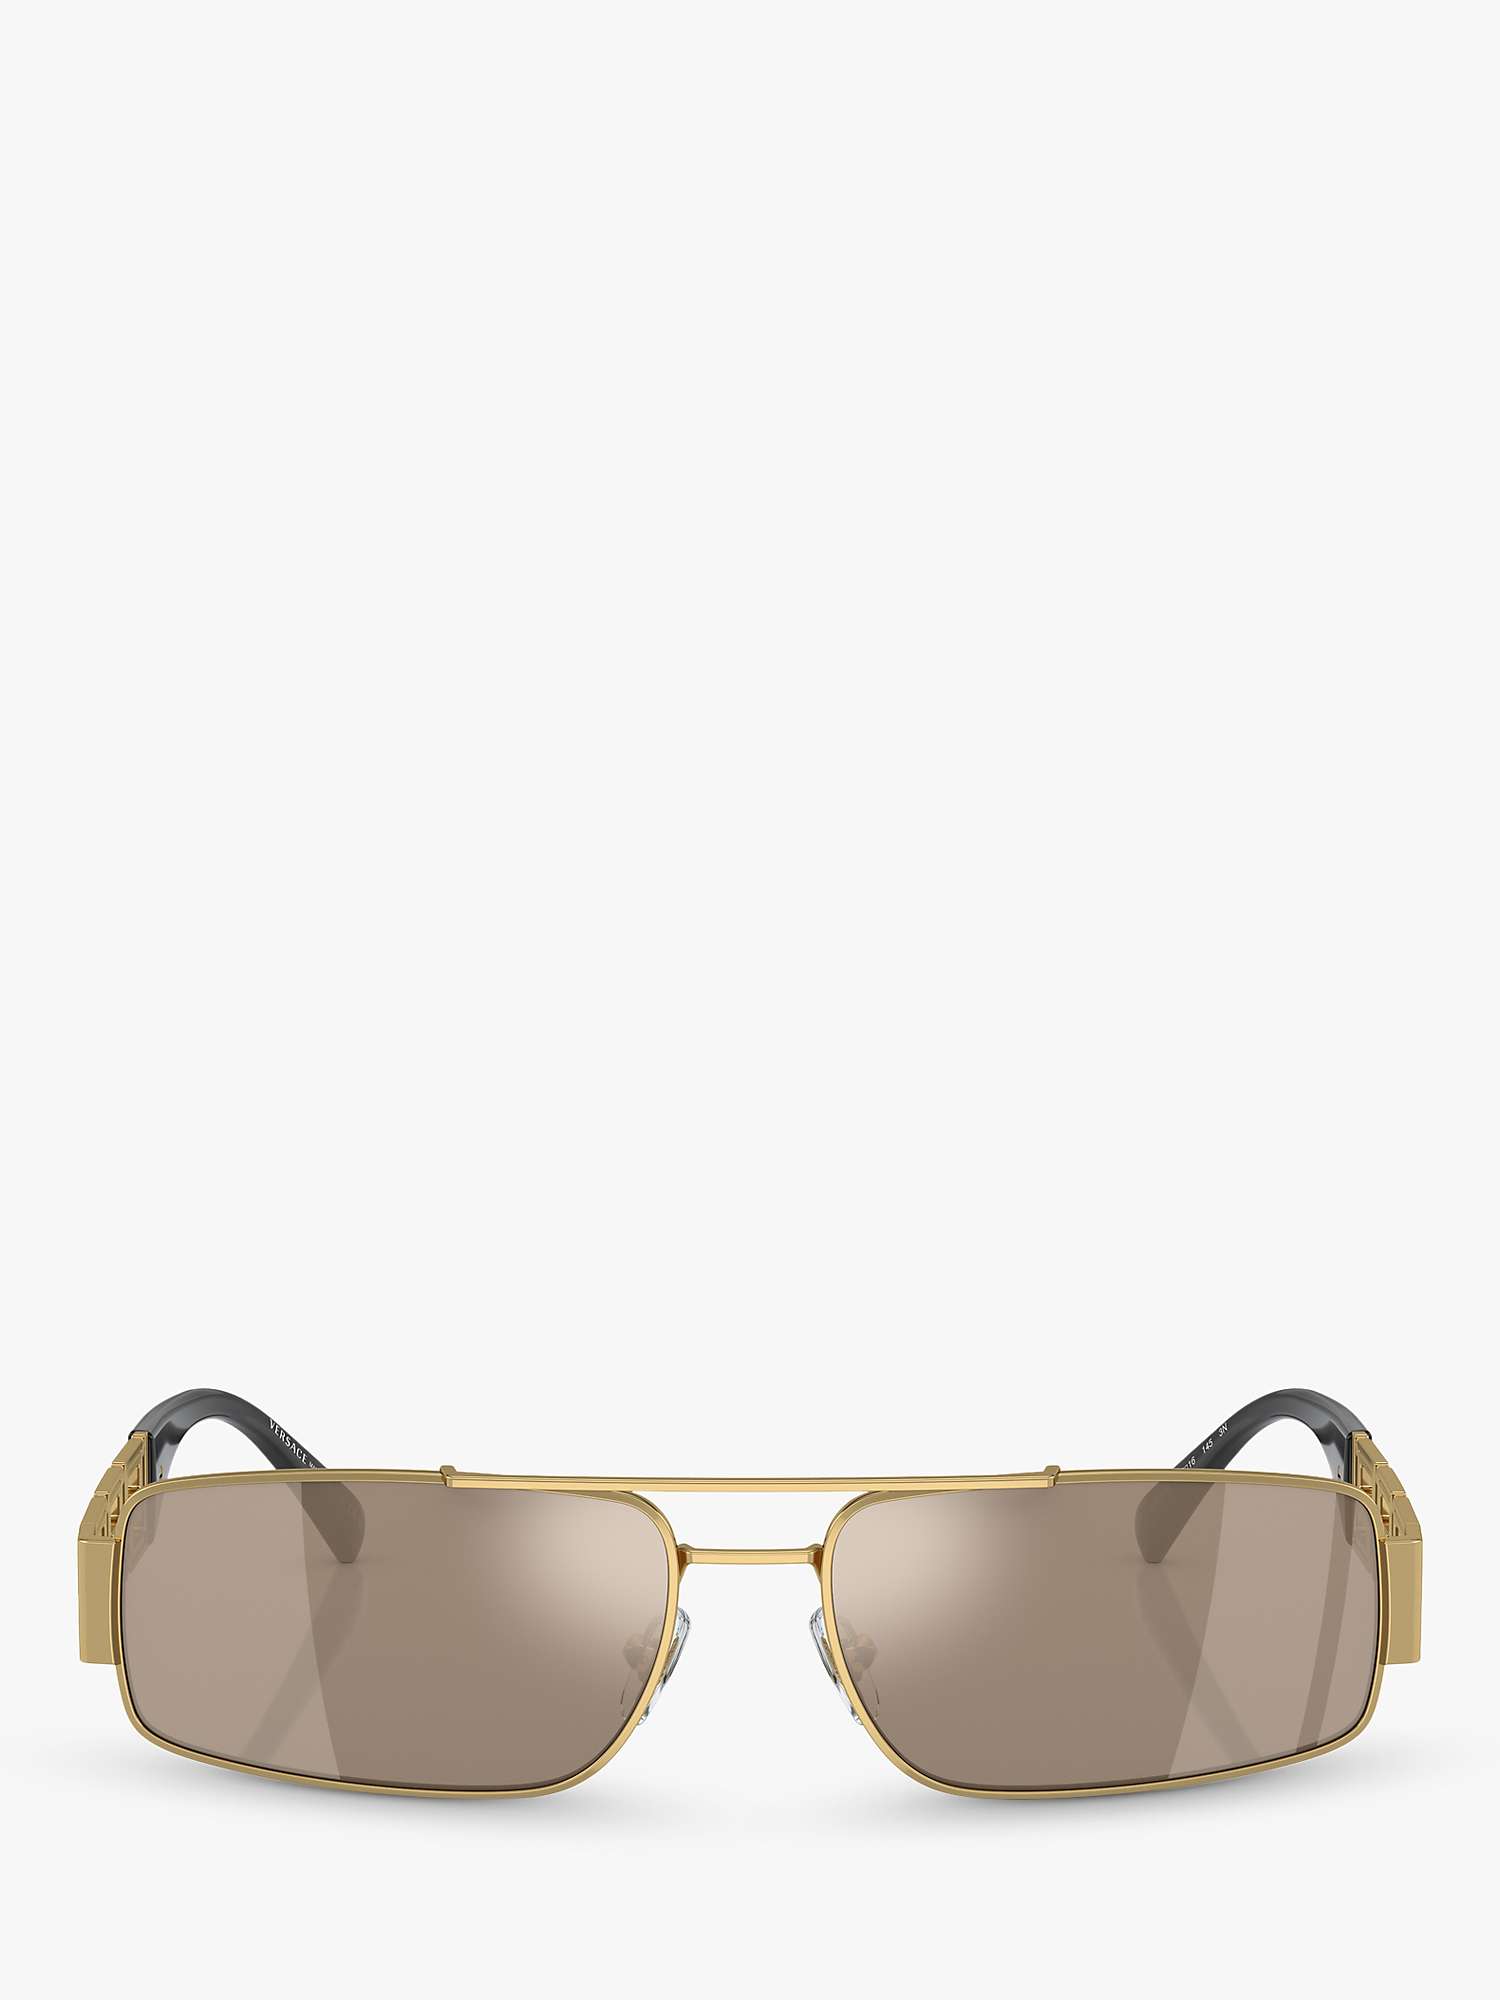 Buy Versace VE2257 Men's Rectangular Sunglasses, Gold Online at johnlewis.com